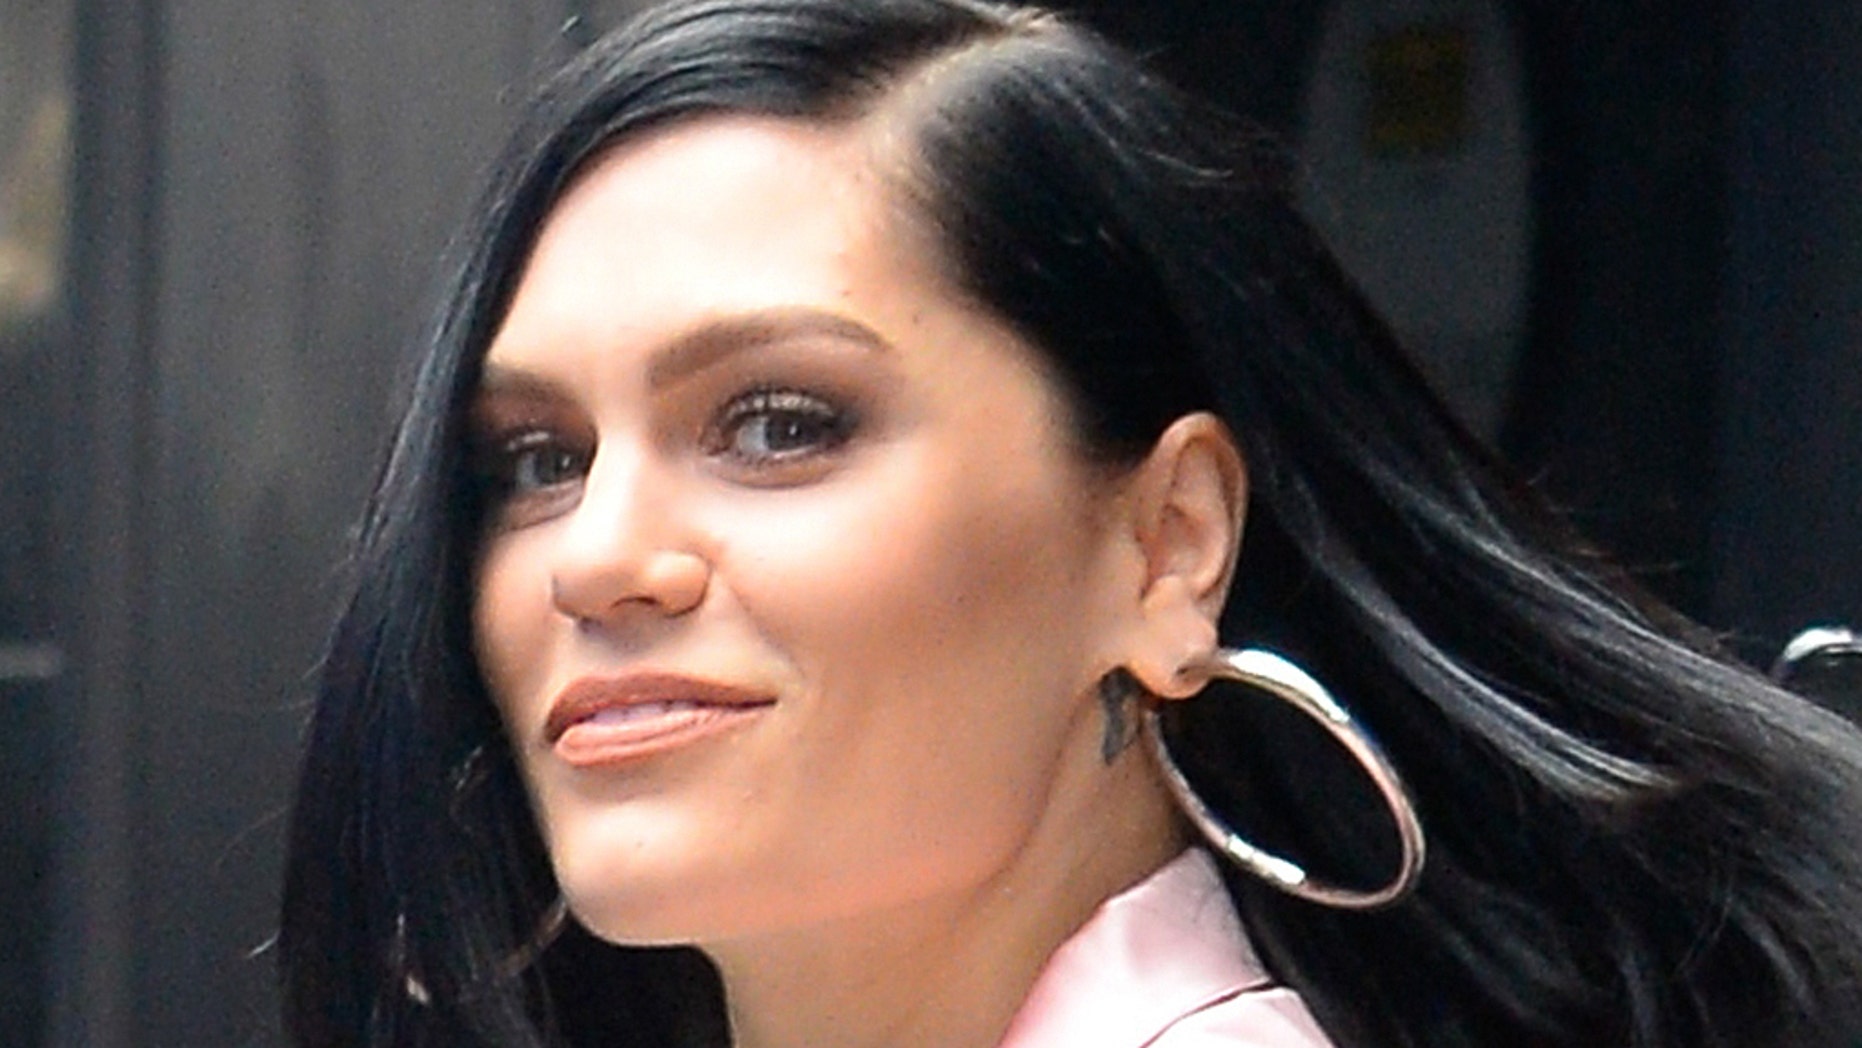 Jessie J posts emotional tribute after sudden death of bodyguard: 